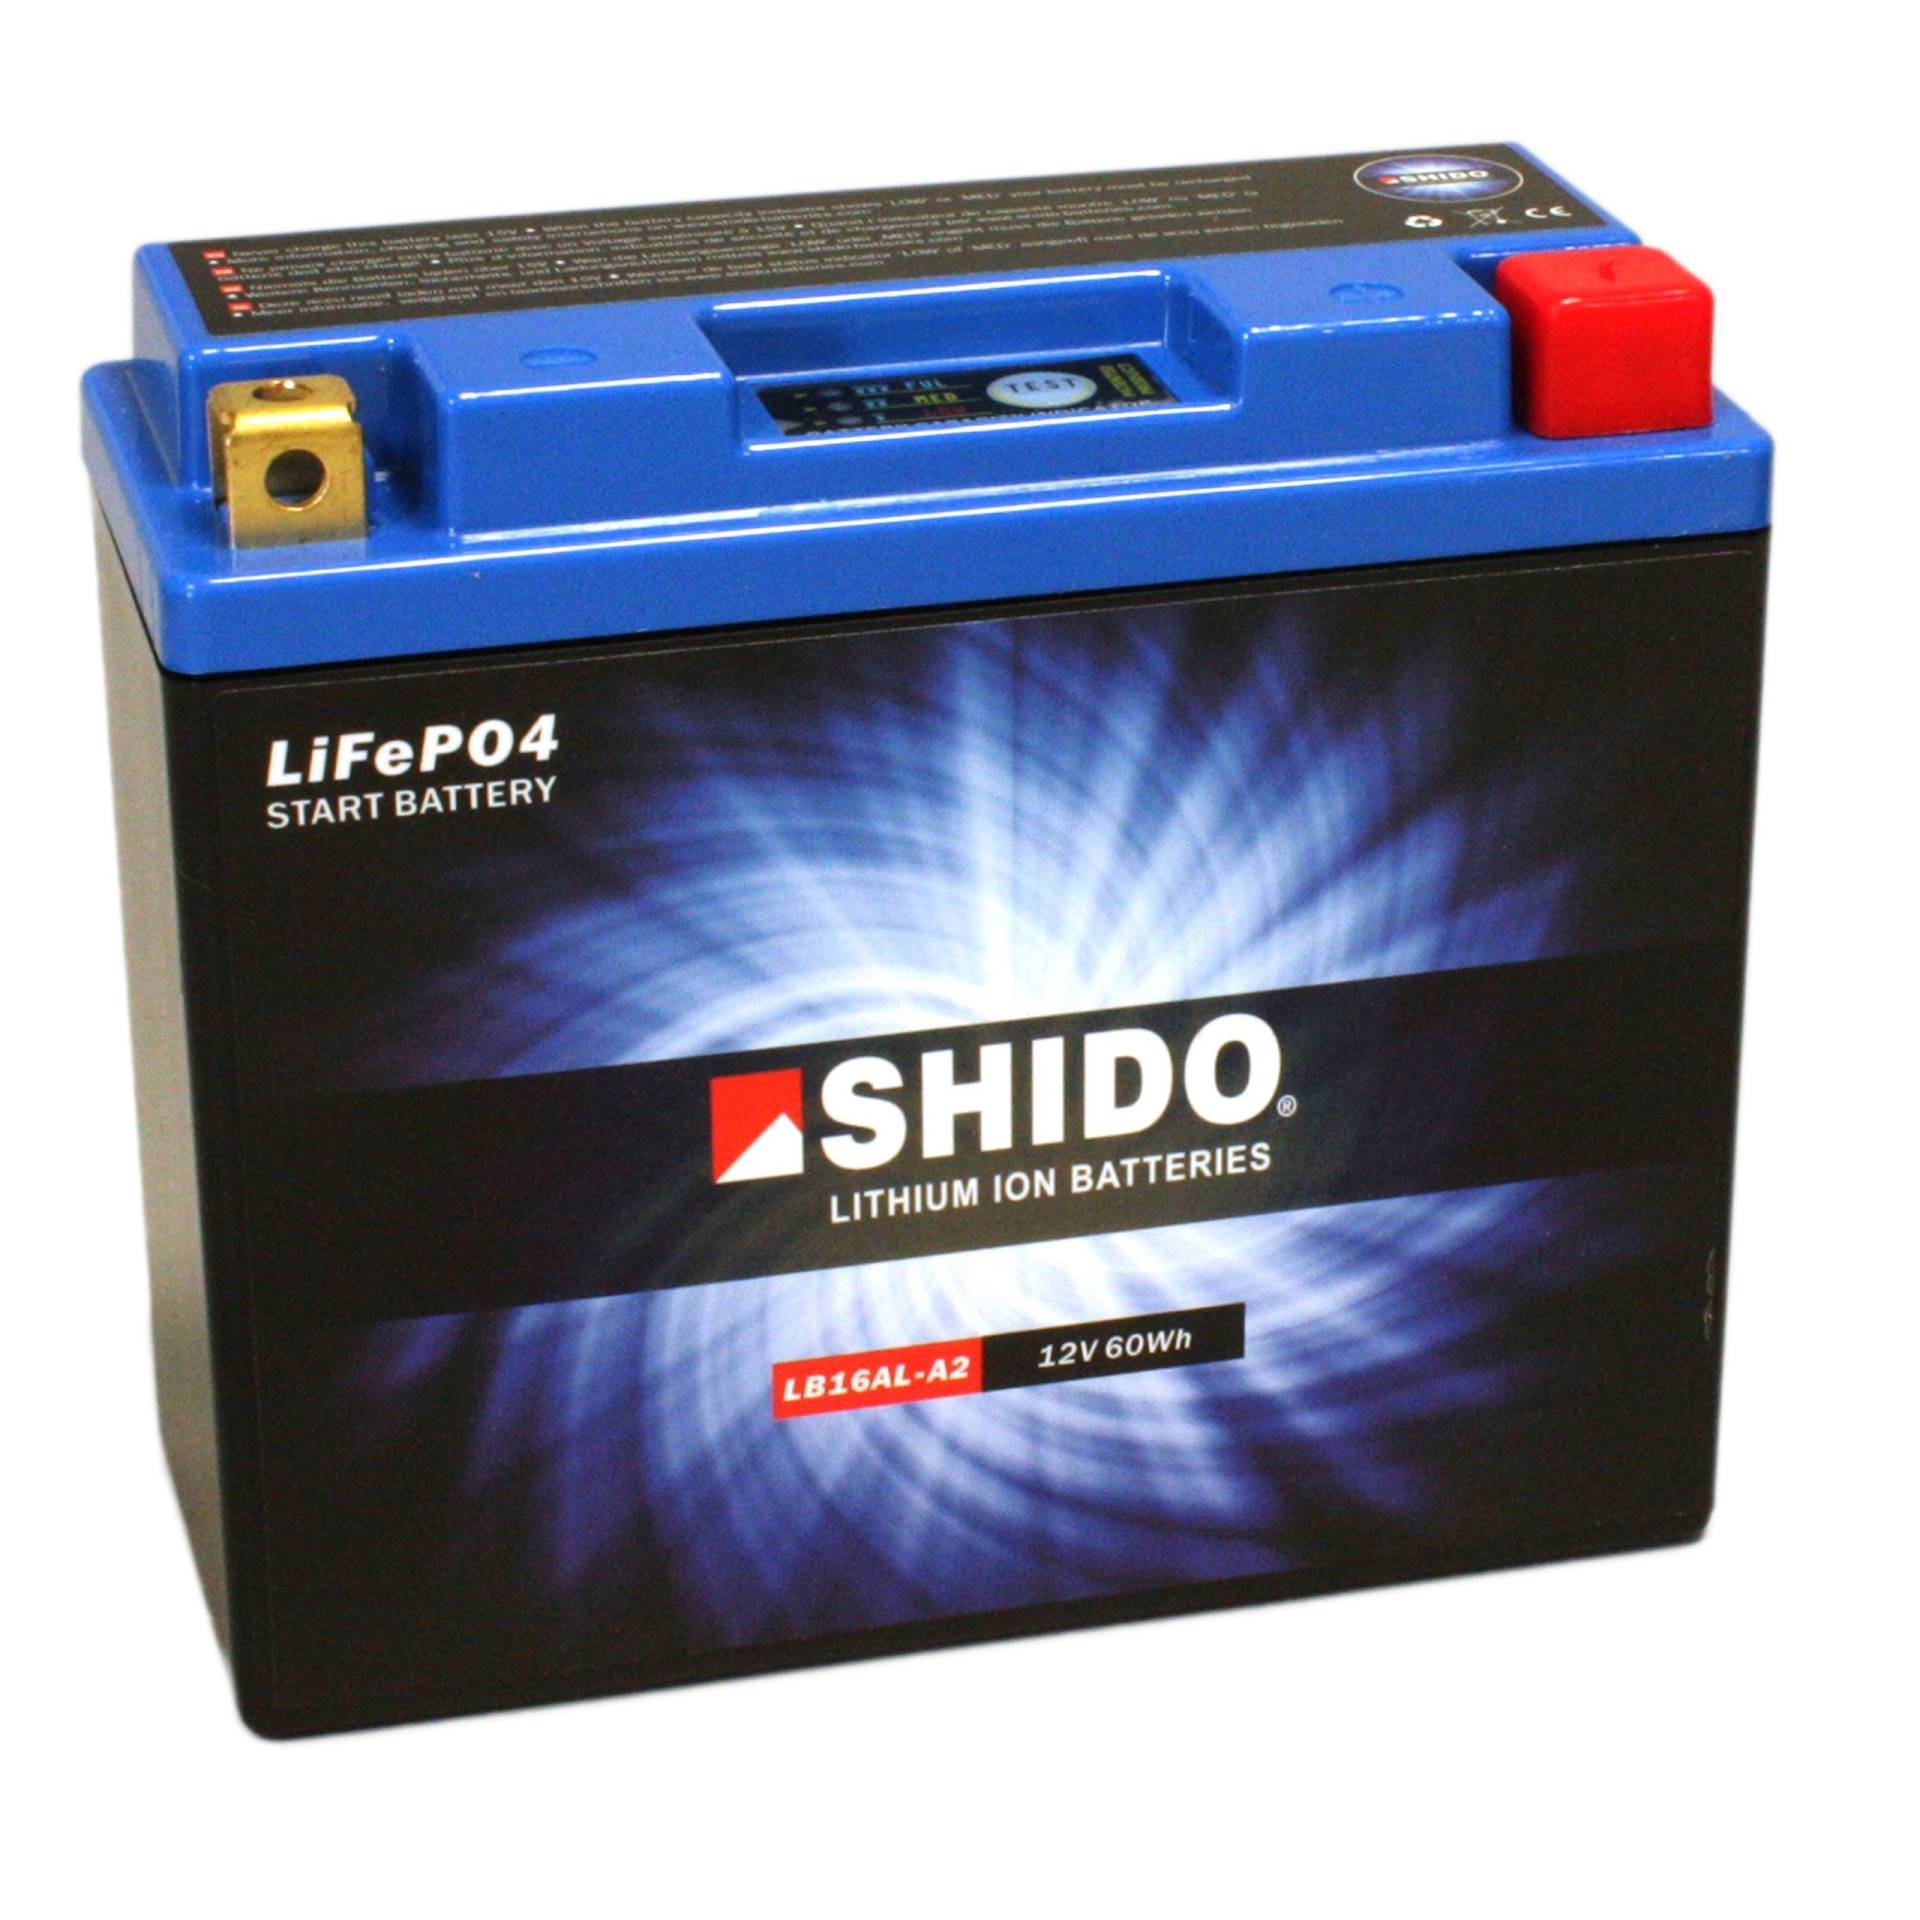 Batterie Shido Lithium LB16AL-A2 / YB16AL-A2, 12V/16AH (Maße: 207x72x164) für Ducati 916 /Biposto/Strada Baujahr 1994 von Shido